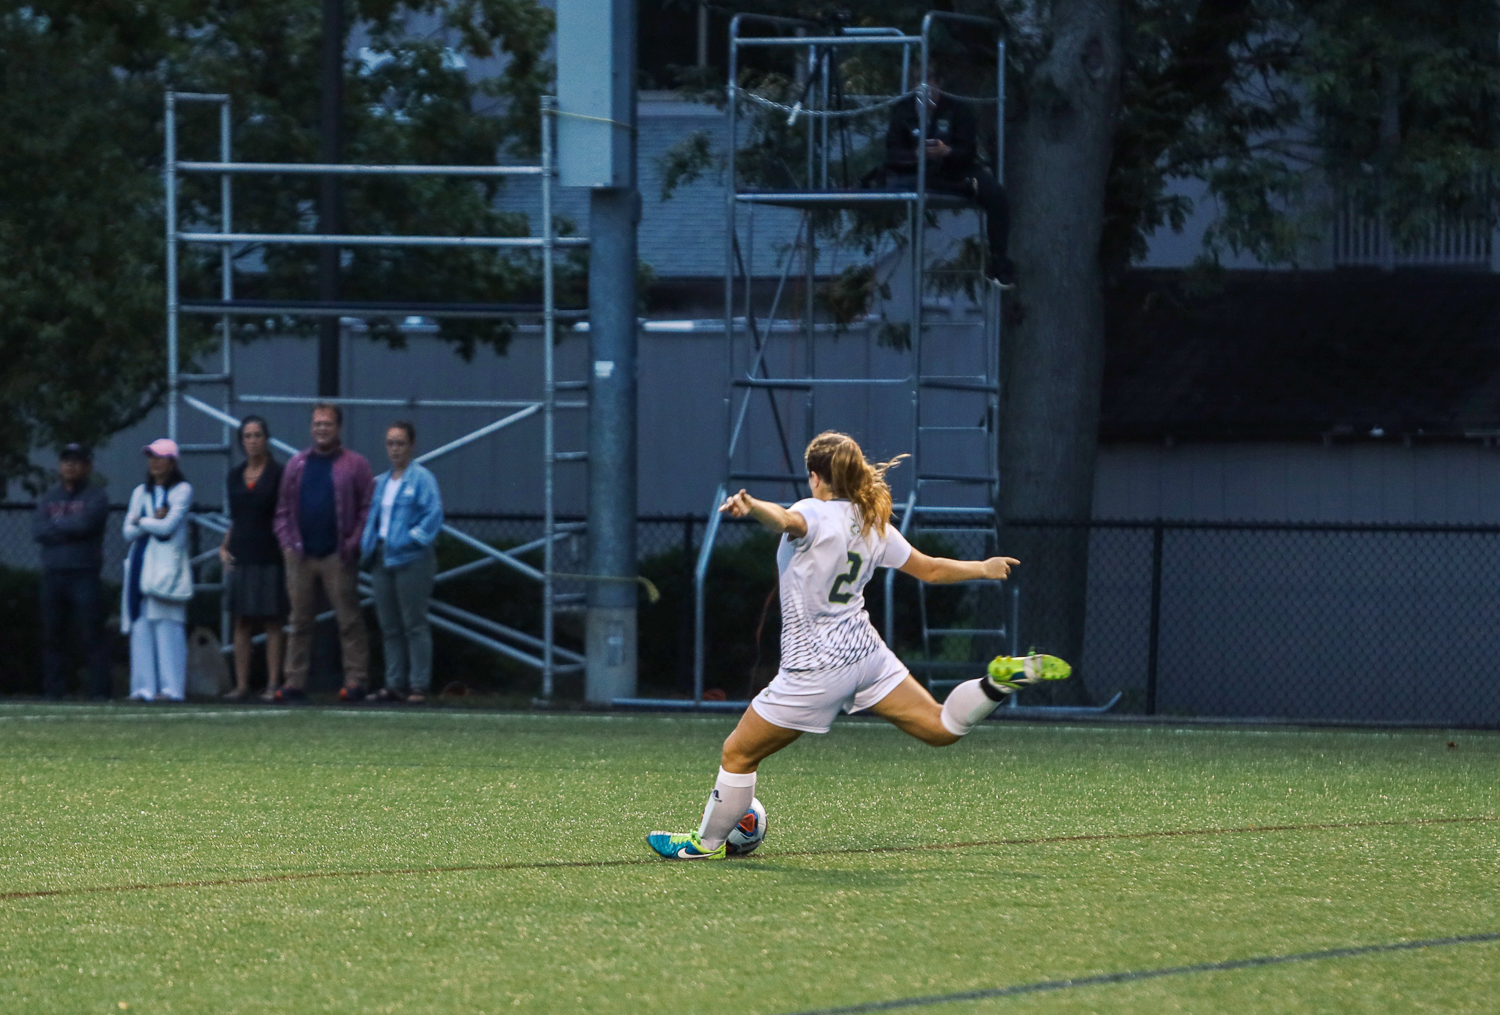 Melanie Mathewson on the soccer field kicking a ball